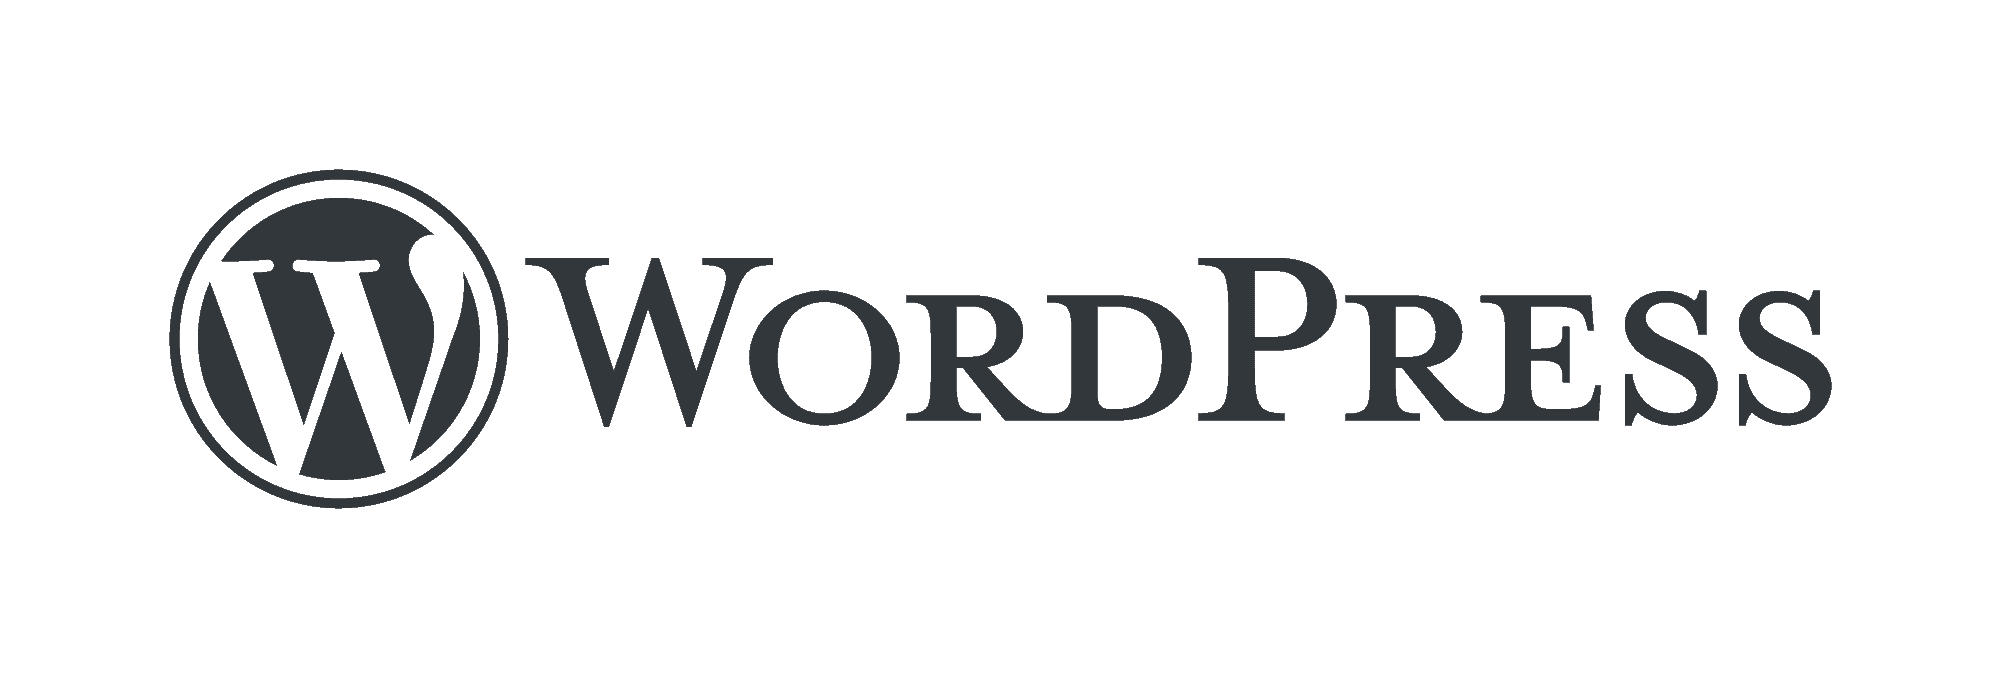 wordpress-logo-blog-hospedalia